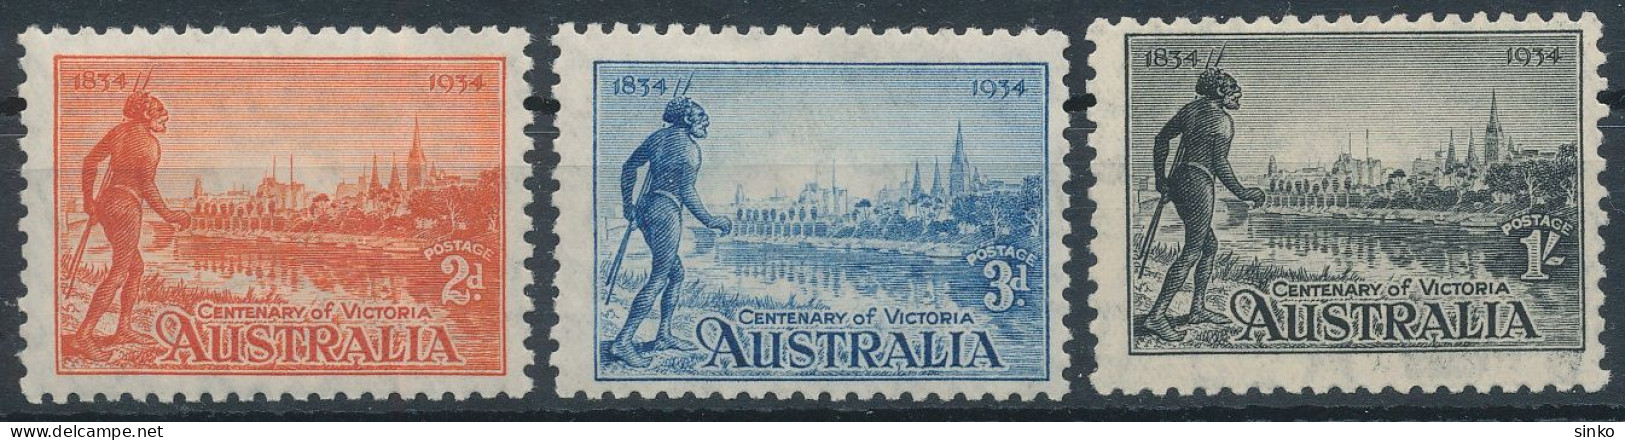 1934. Australia - Mint Stamps